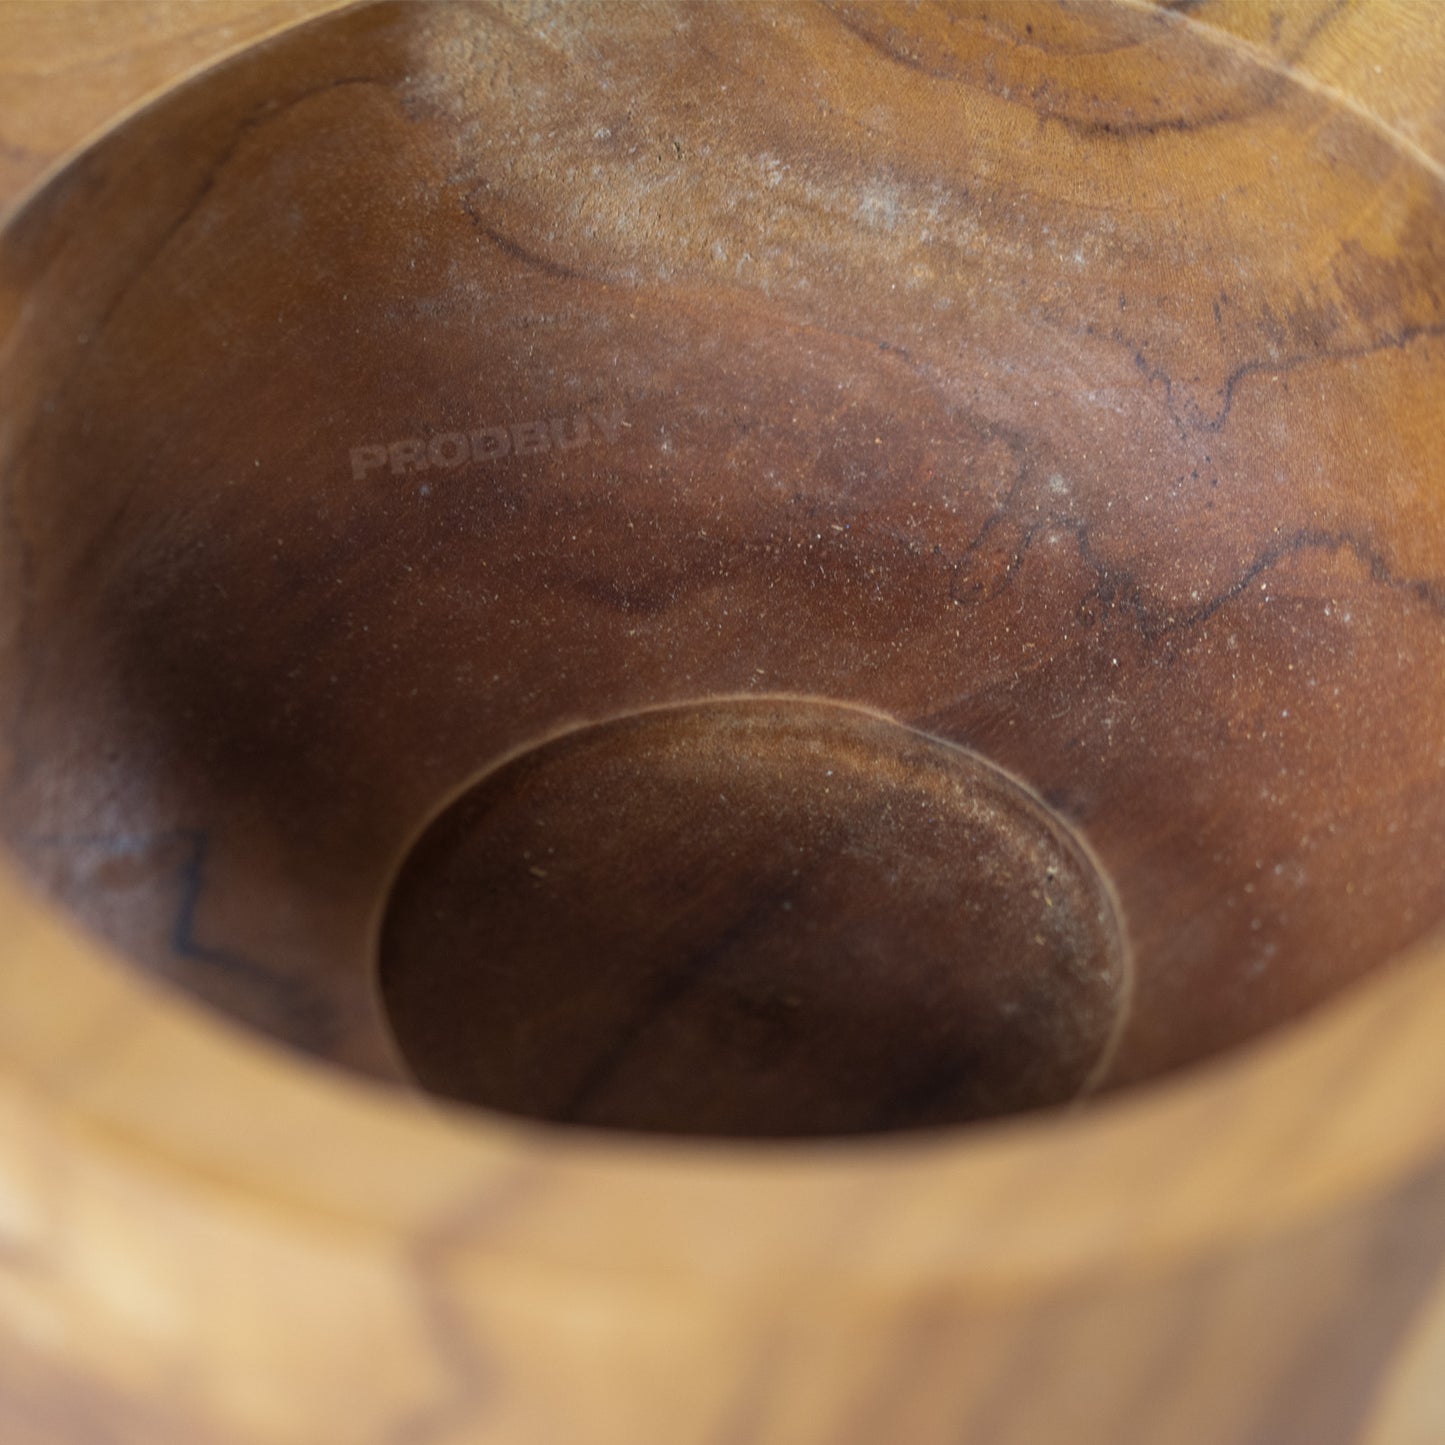 Wooden Pillar Candle Holder Bowl Teak Root Wood Unique Hand Carved